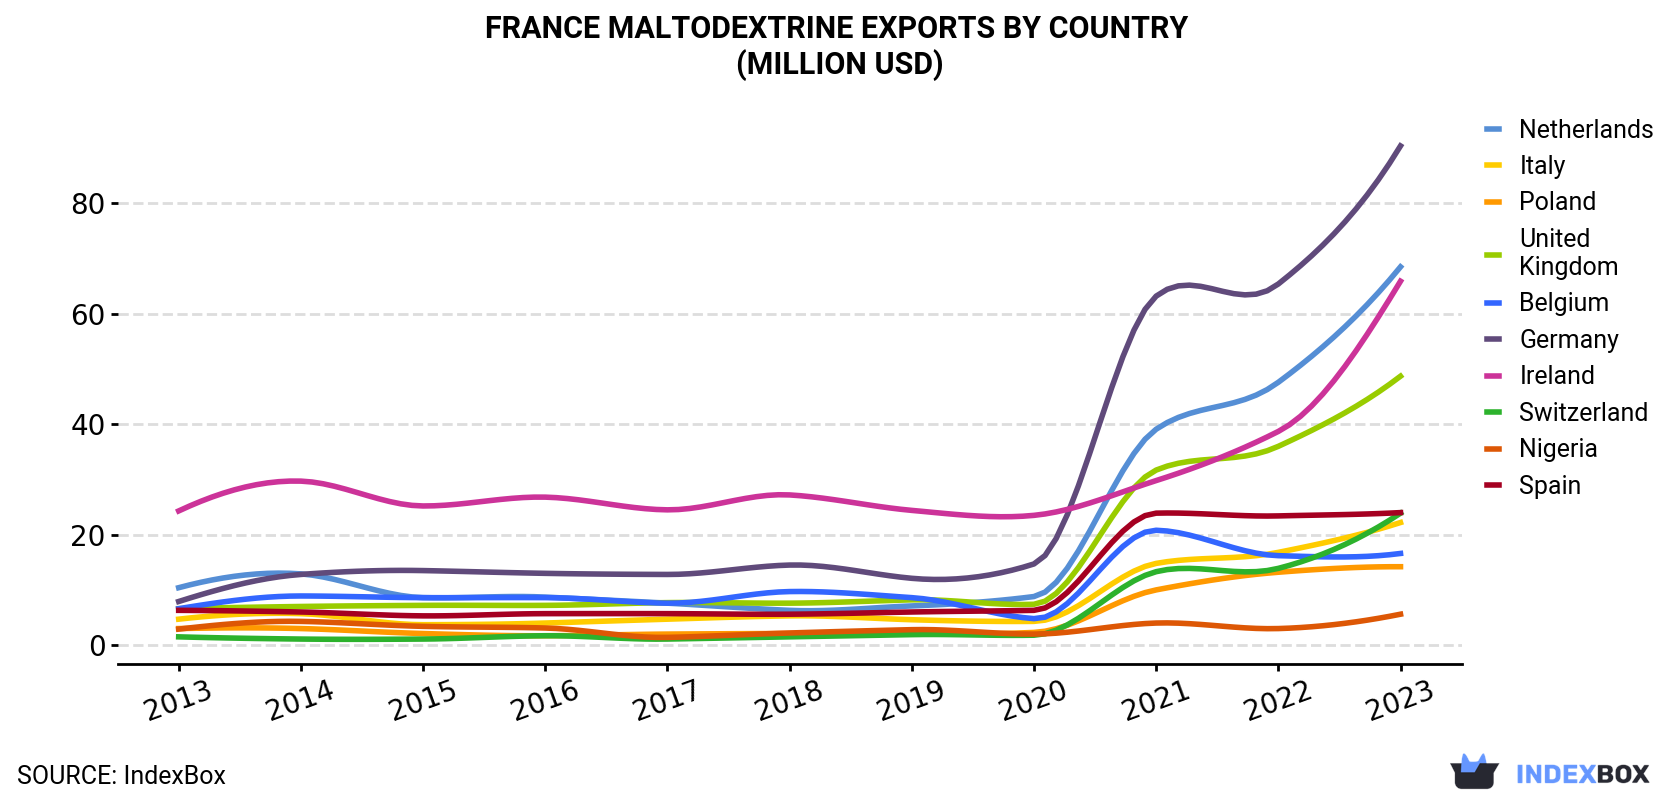 France Maltodextrine Exports By Country (Million USD)